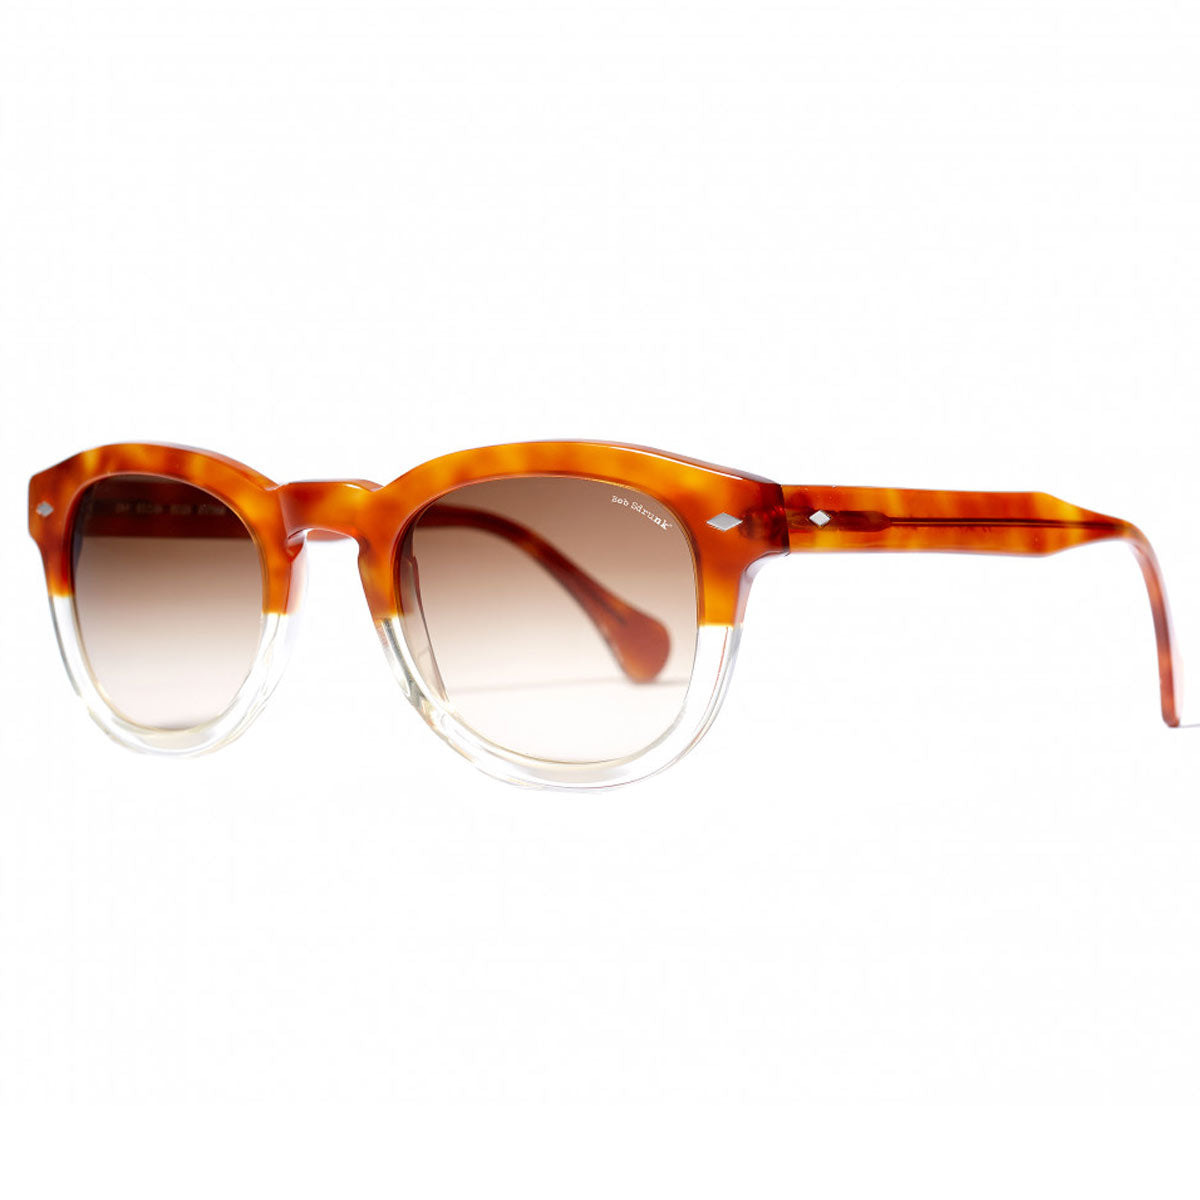 Bob Sdrunk Women's Sunglasses - Honey Tortoise and Champagne / MATT-02-20-48-23-145